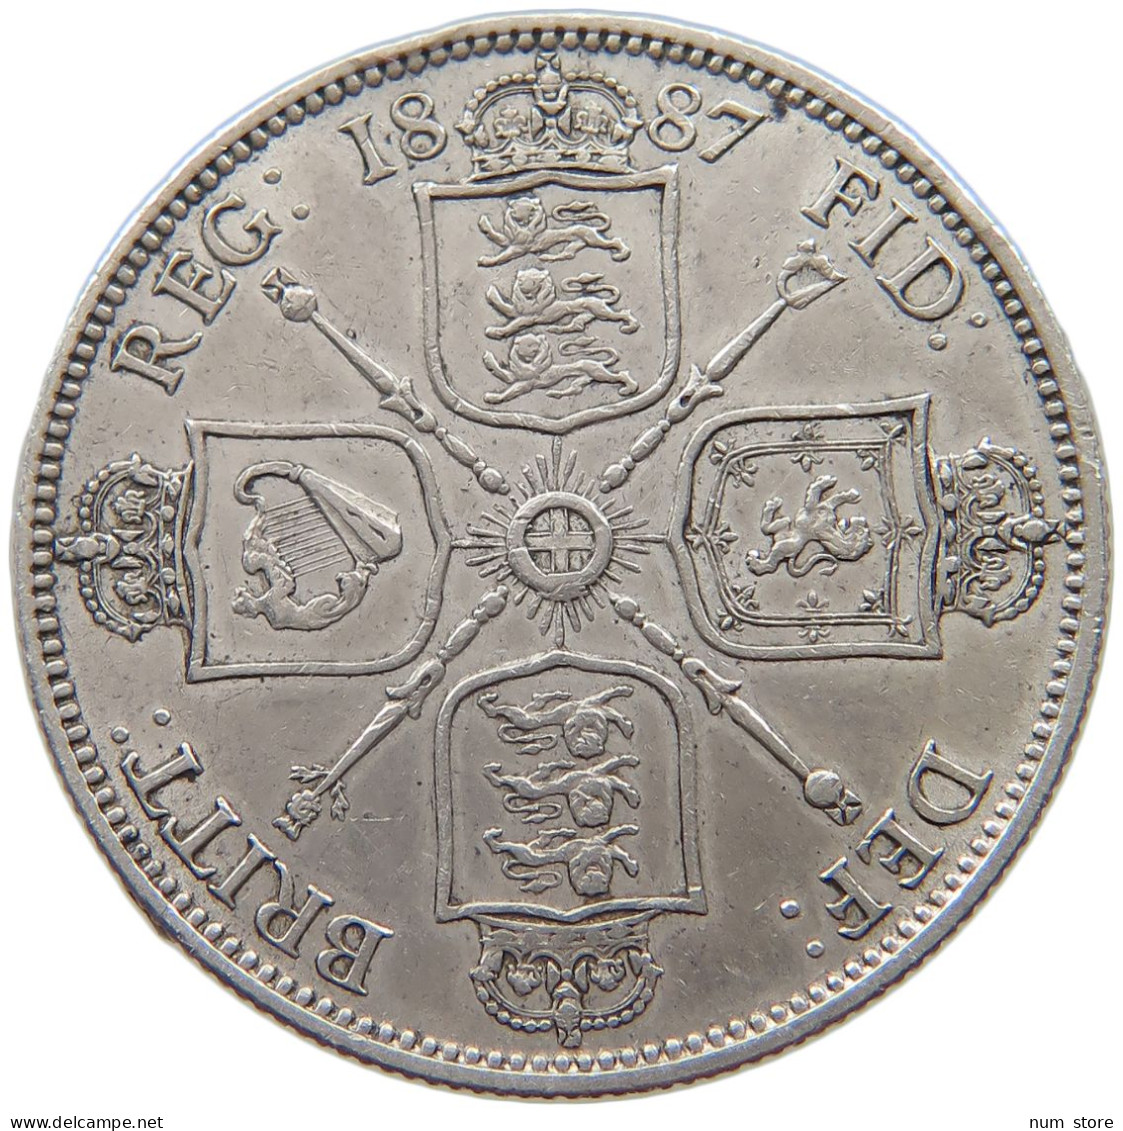 GREAT BRITAIN FLORIN 1887 Victoria 1837-1901 #a003 0175 - J. 1 Florin / 2 Schilling